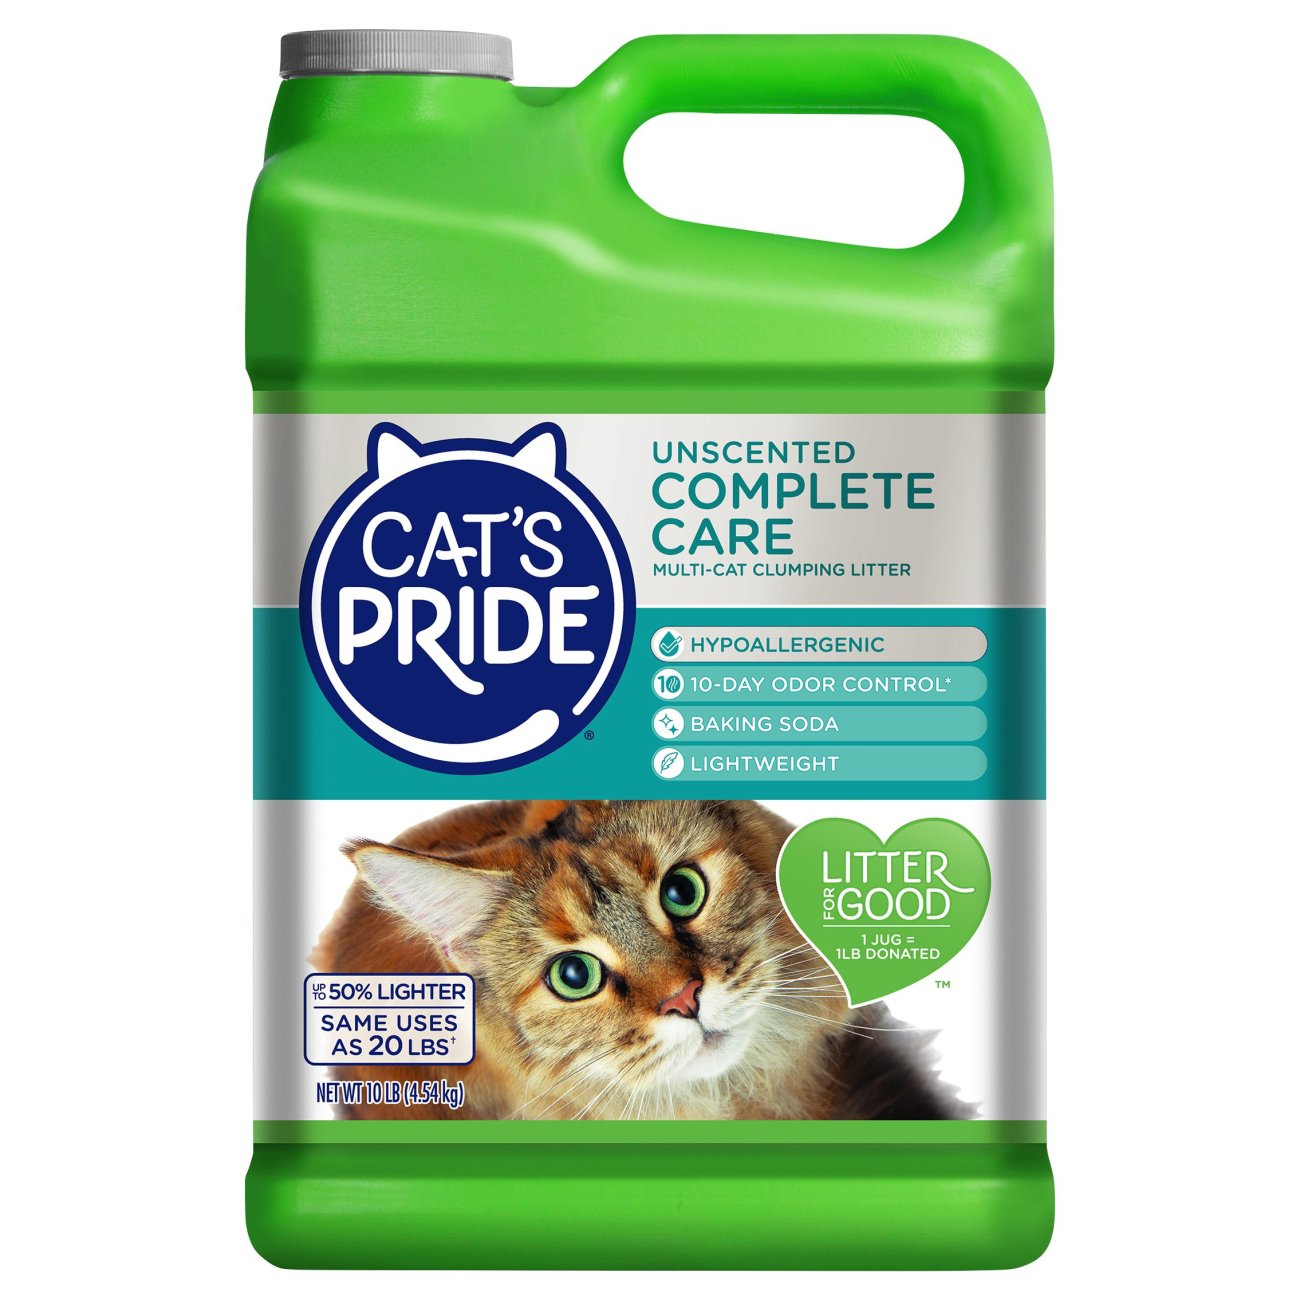 Cat's Pride Fresh & Light Ultimate Care Unscented MultiCat